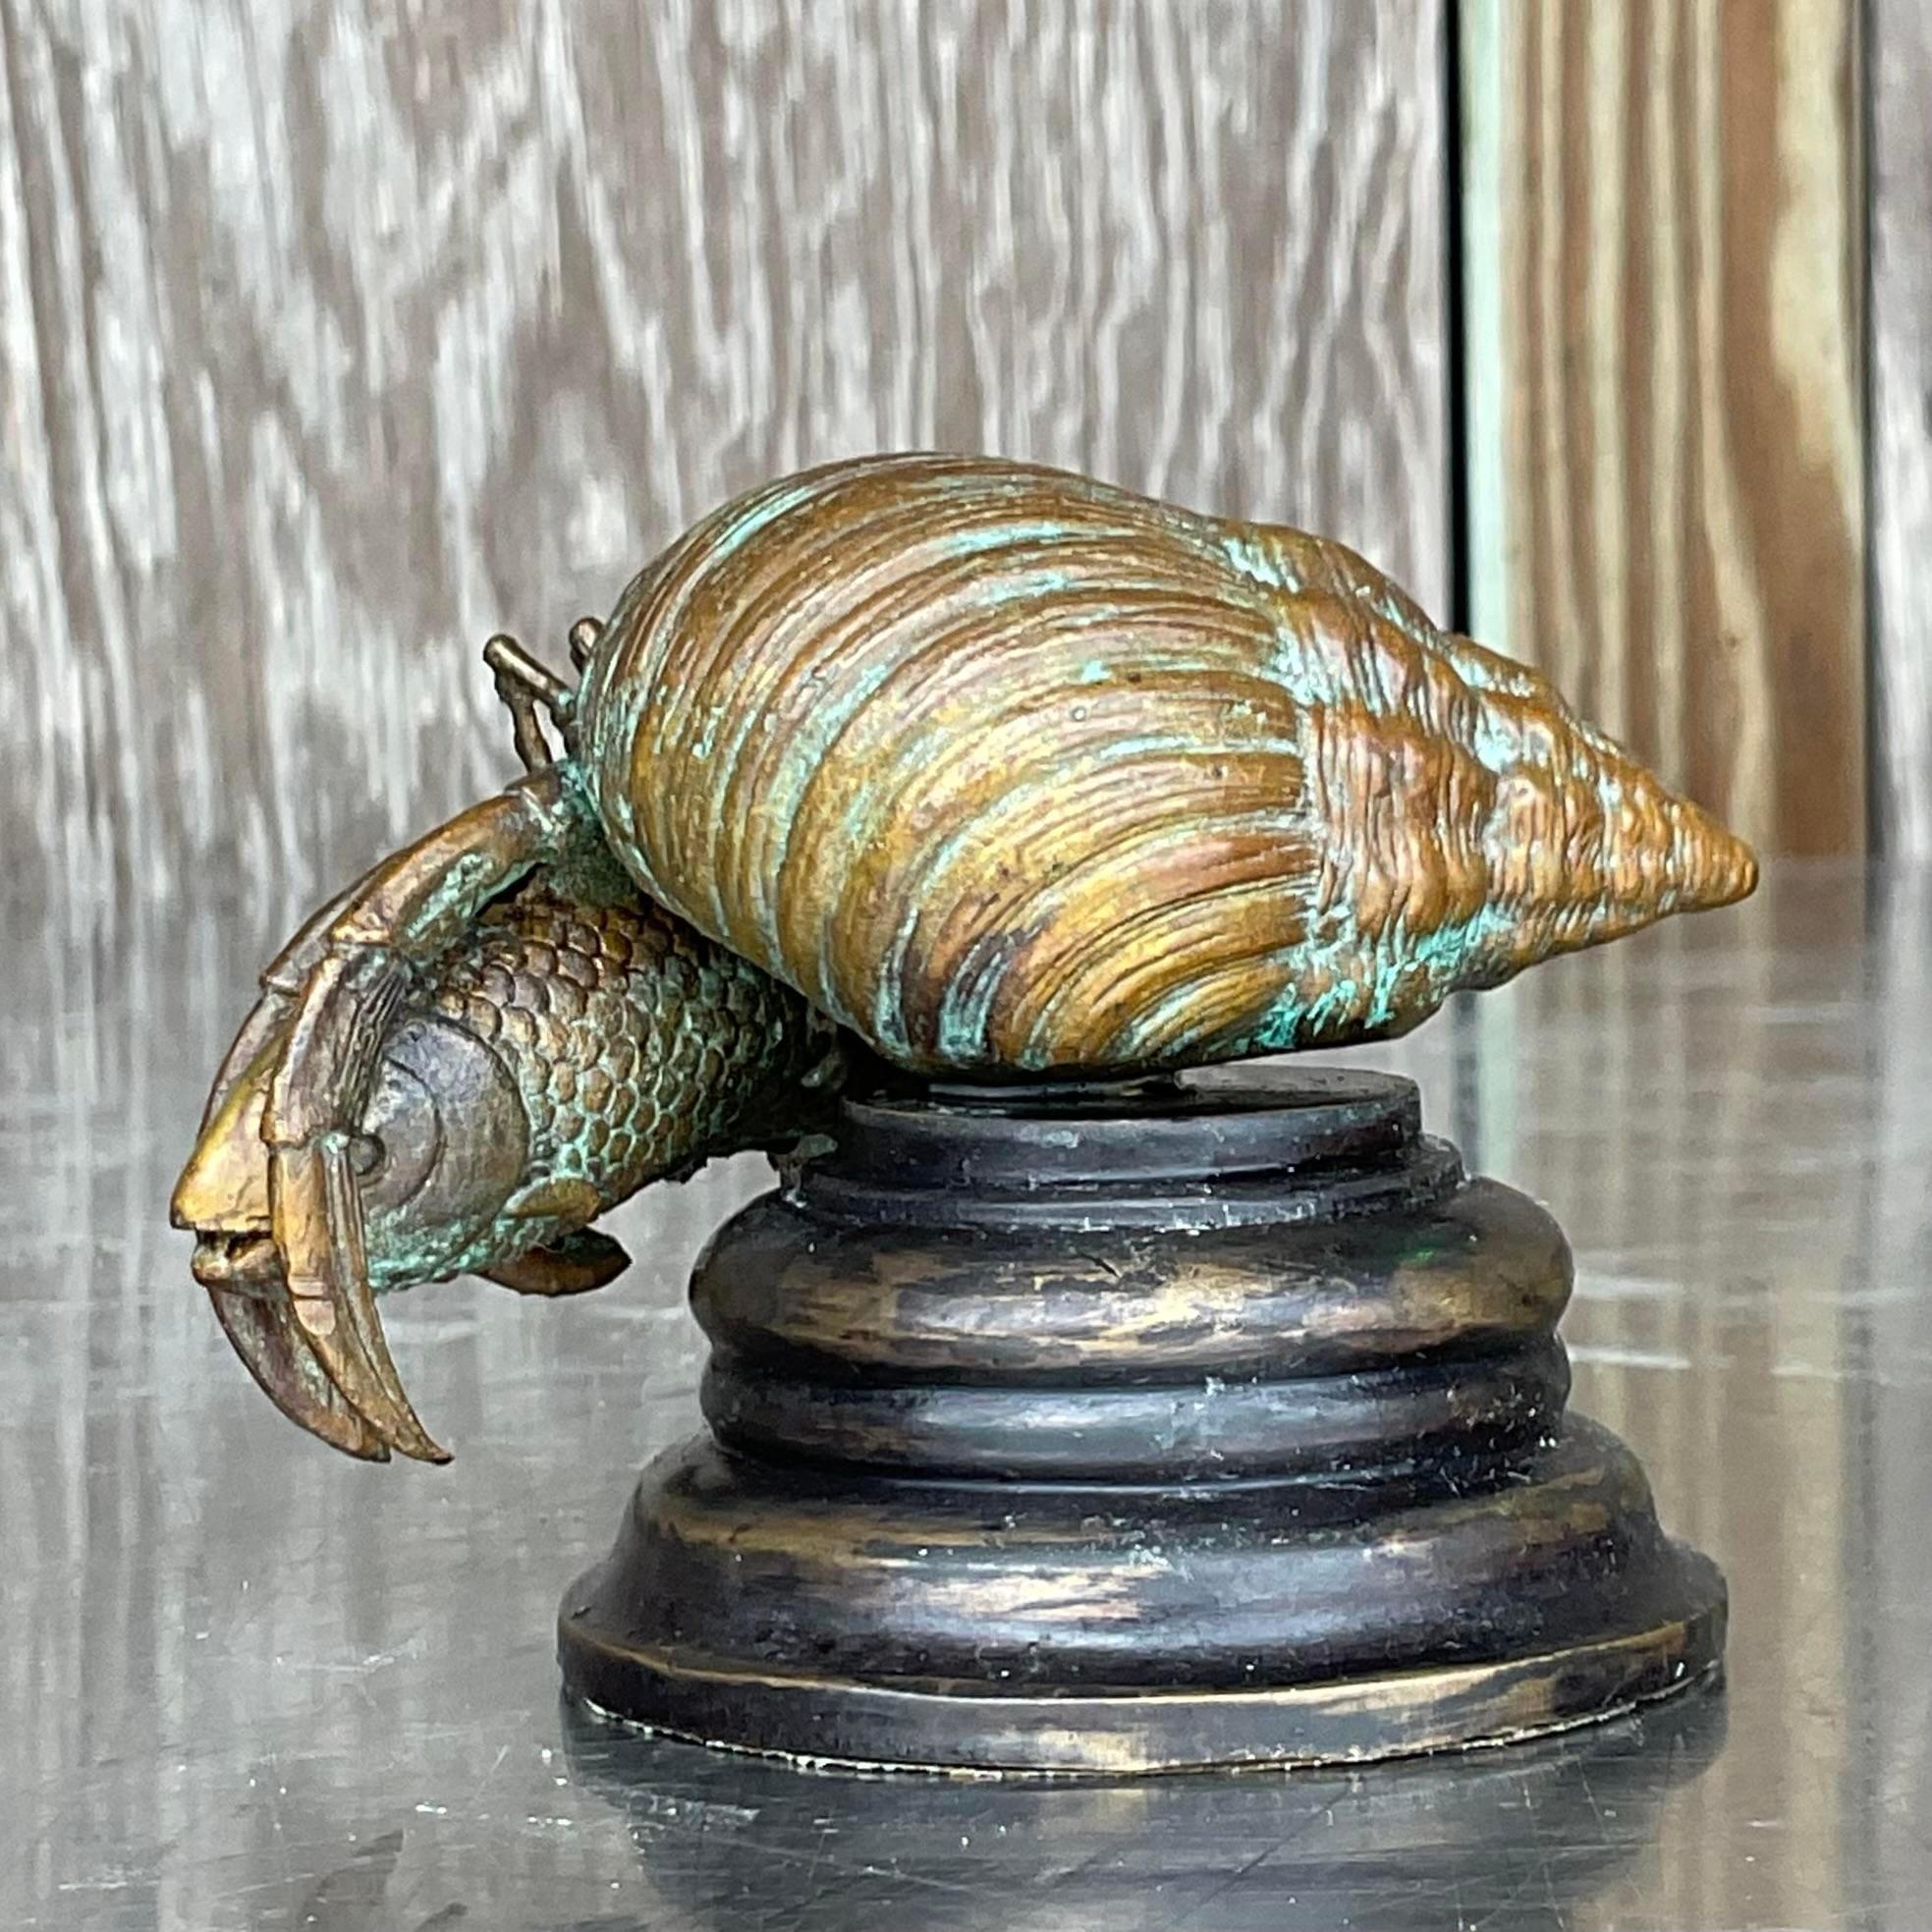 Philippin Vieille crabe d'esclave du côte Maitland Smith en bronze en vente